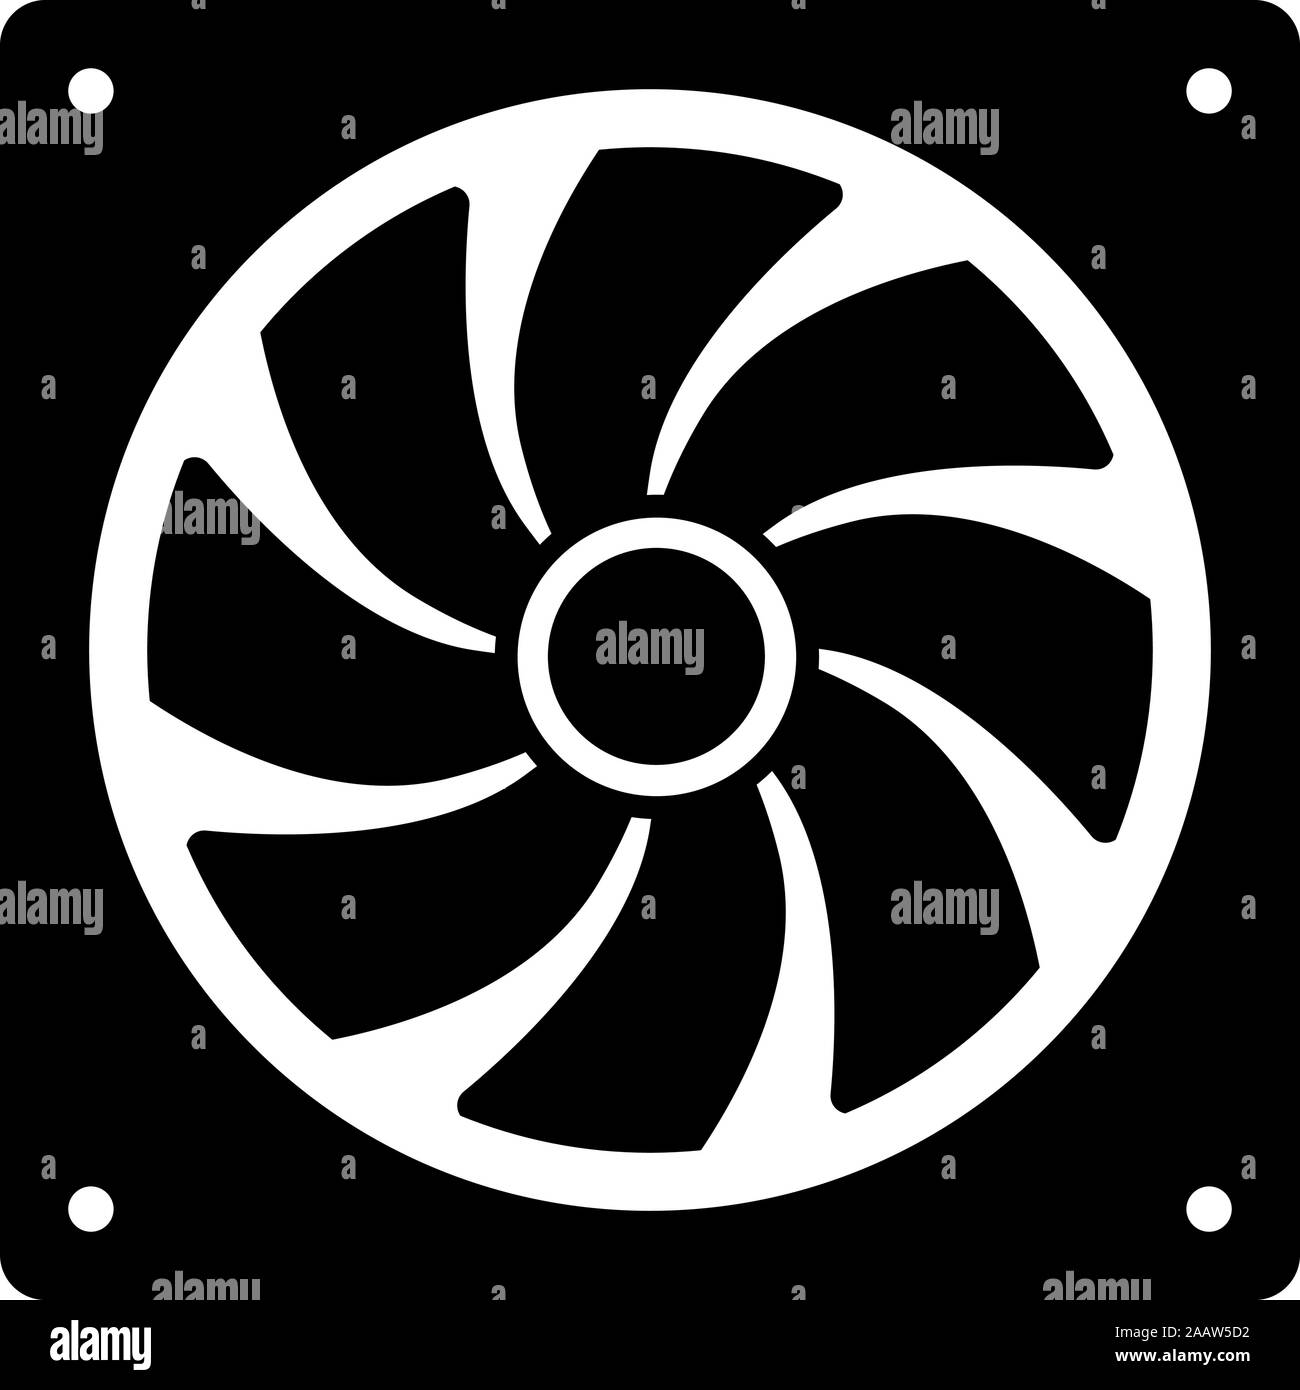 Ventilation - Free computer icons